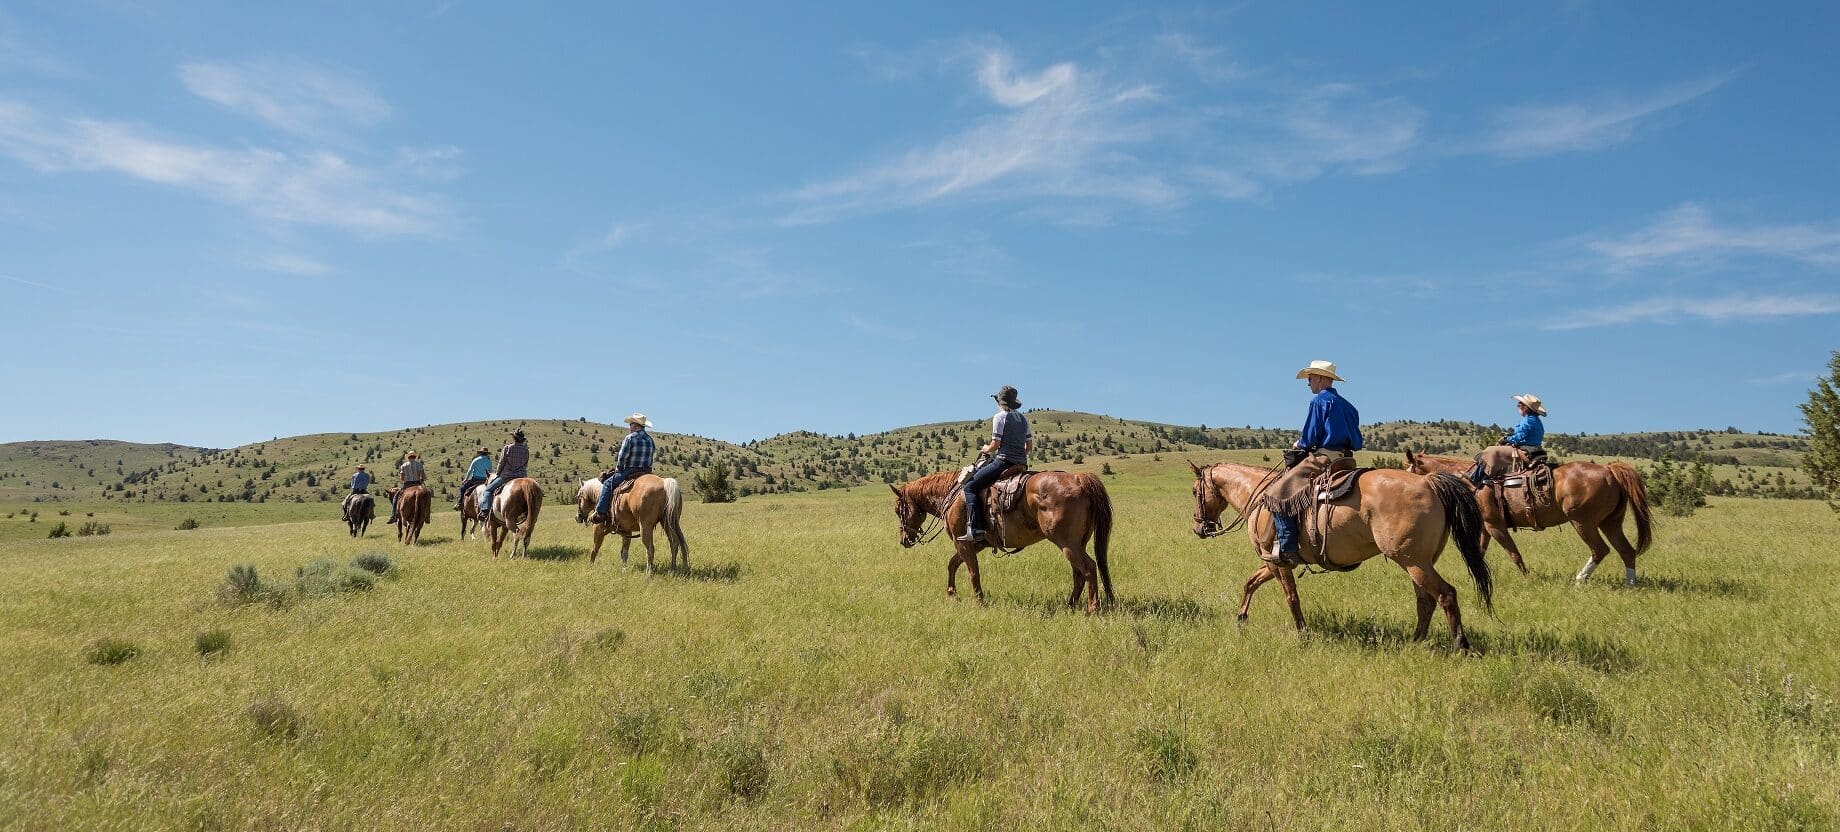 Horseback riding across the field at Wilson Ranches Retreat Cowboy